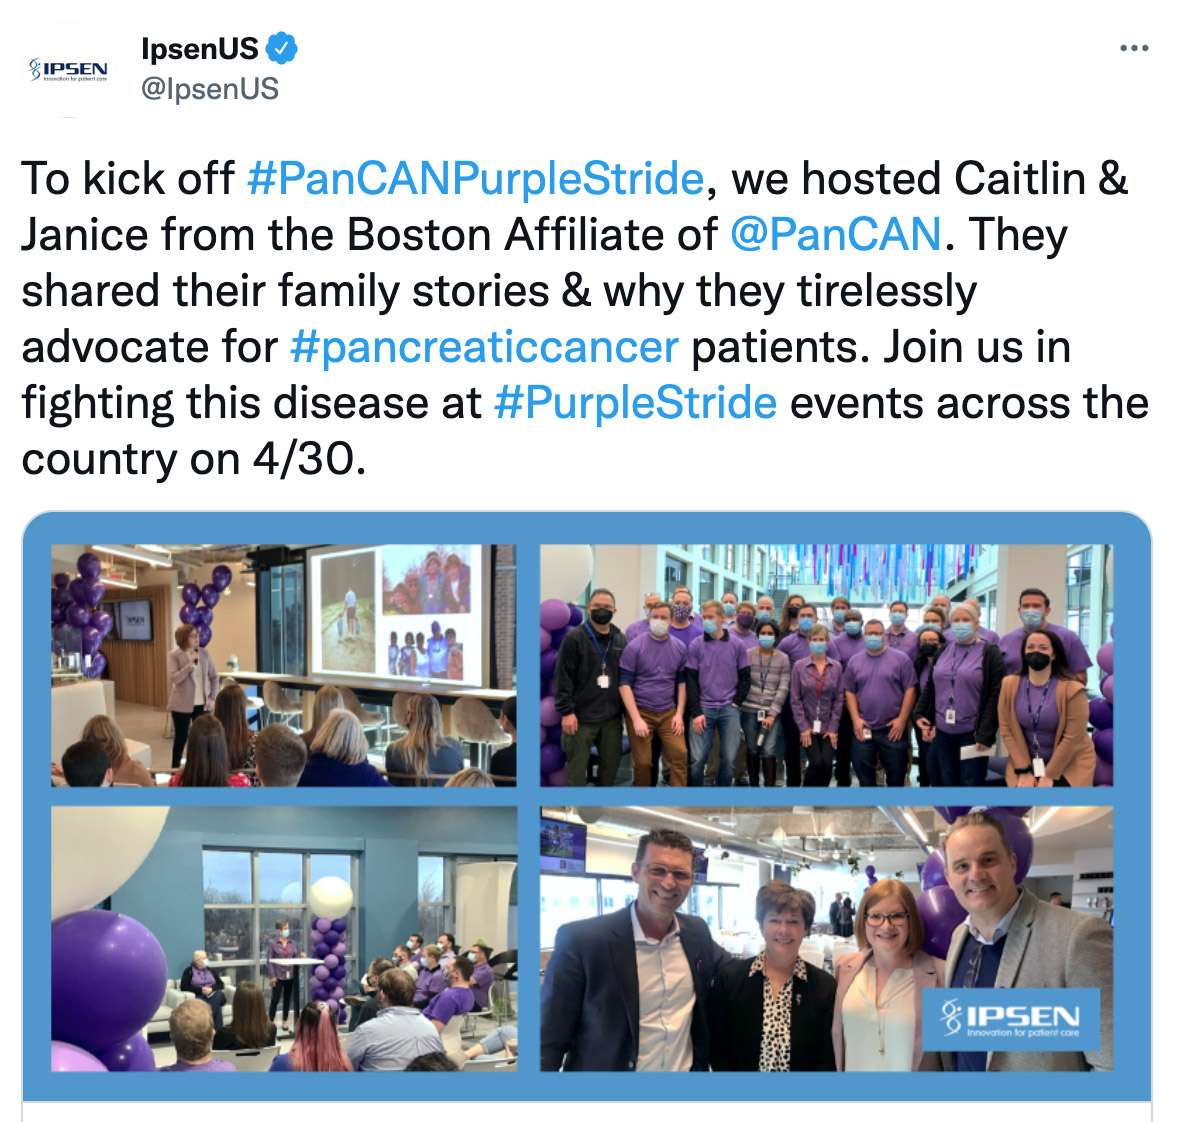 Image of Ipsen Tweet highlighting PanCAN PurpleStride Kickoff at their office